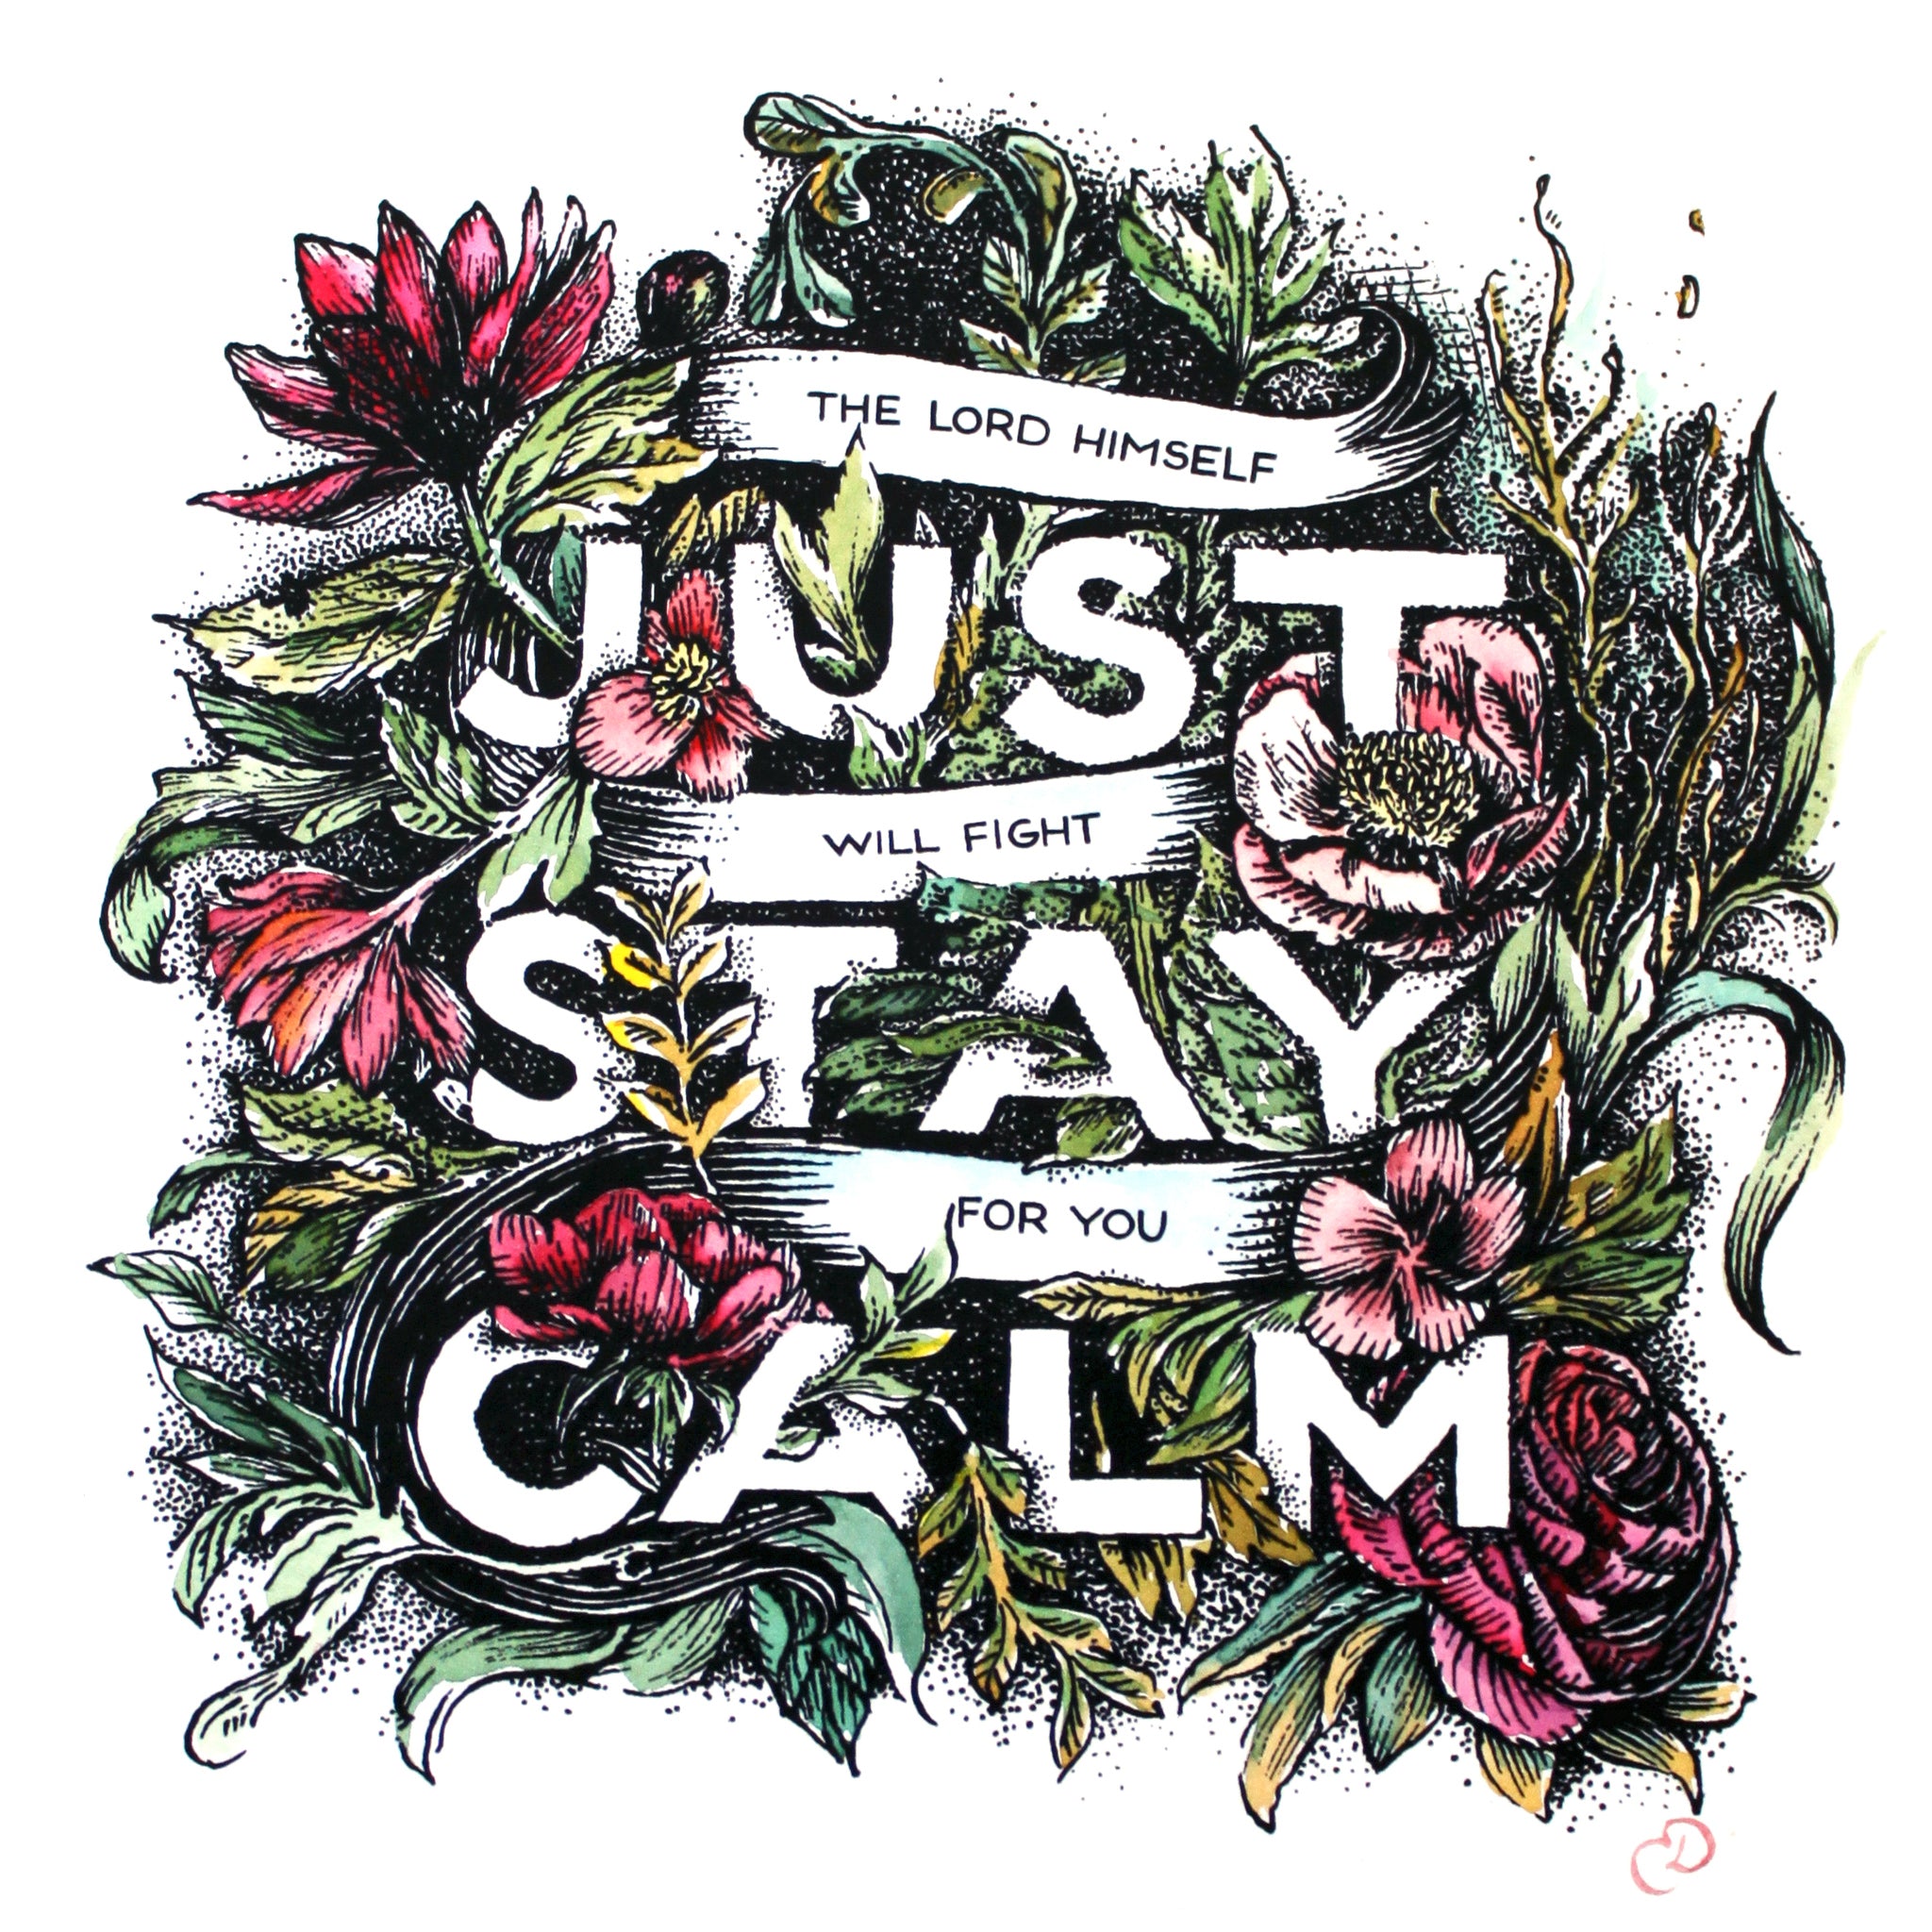 Just Stay Calm - Exodus 14:14 A4 art print